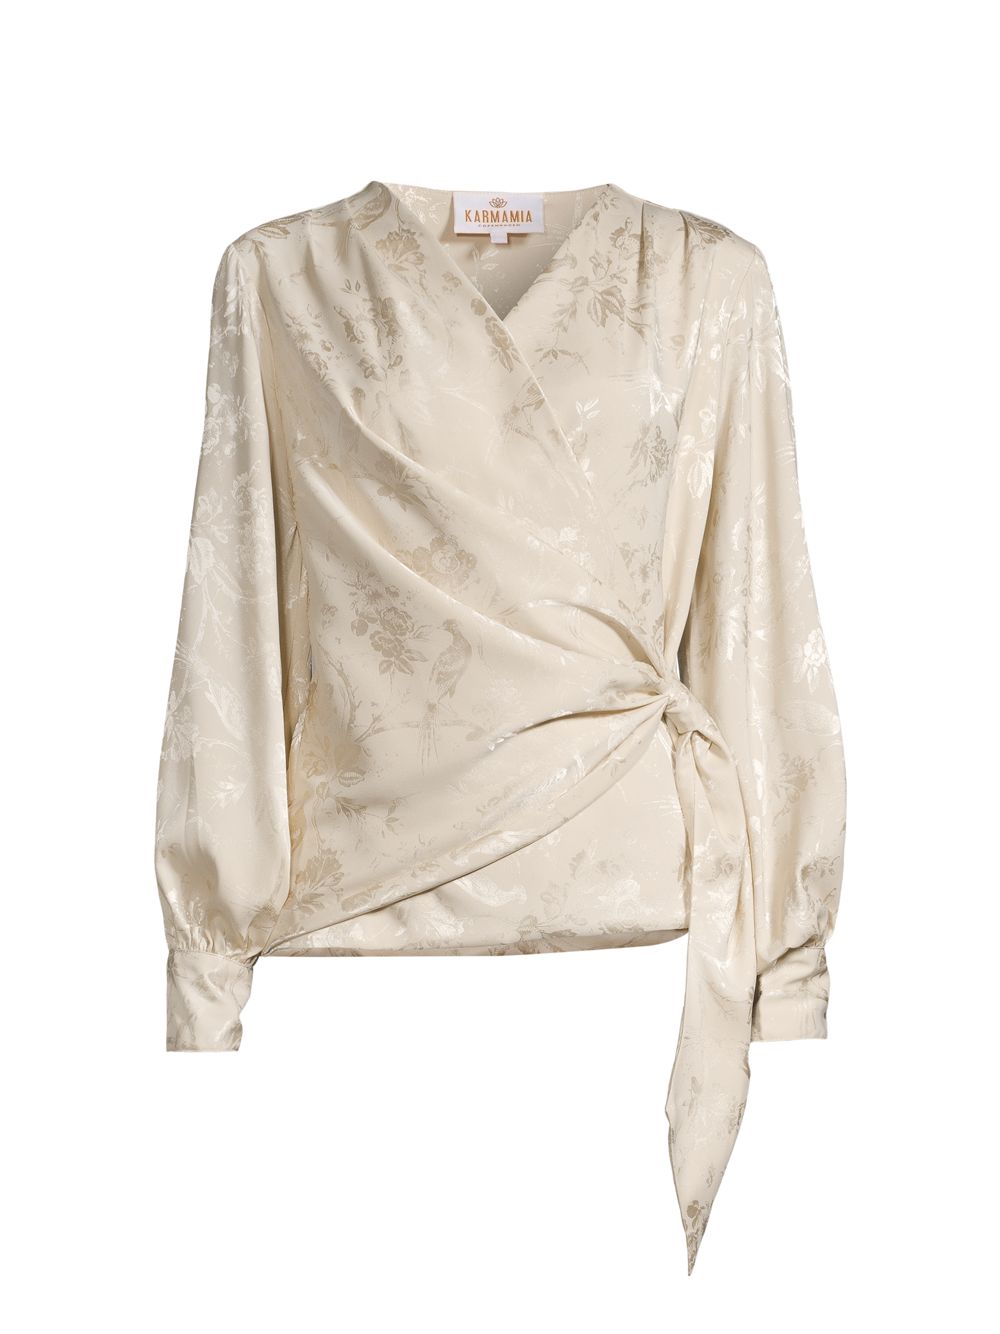 Атласная блузка с запахом Ines Karmamia